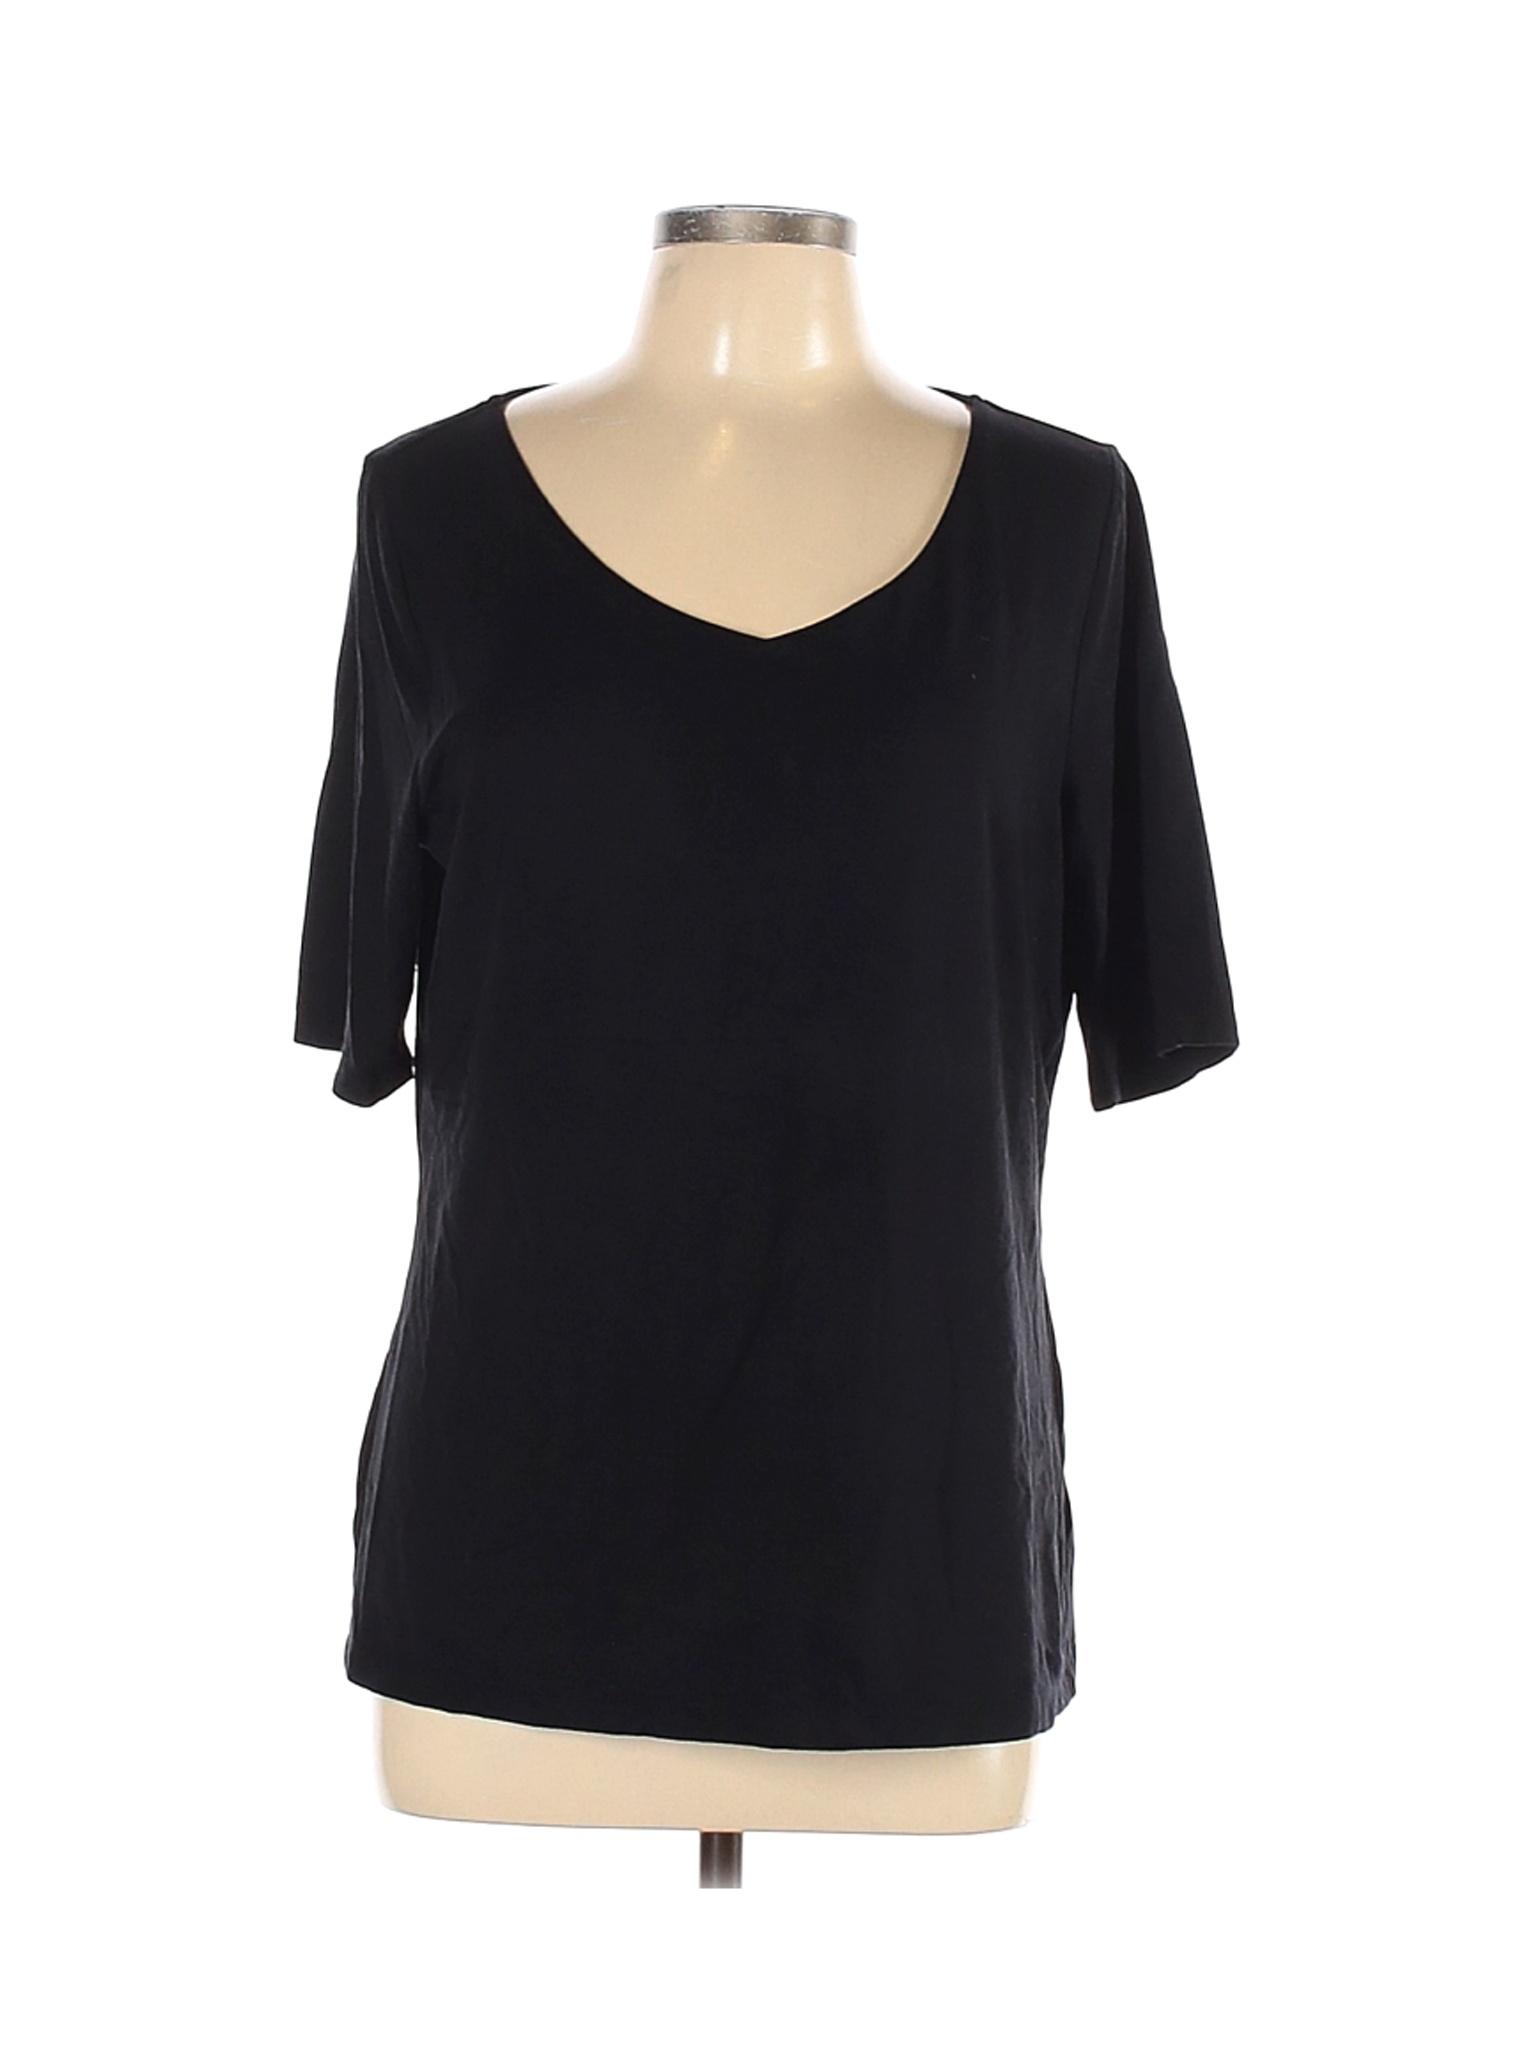 Talbots Women Black Short Sleeve T-Shirt L | eBay